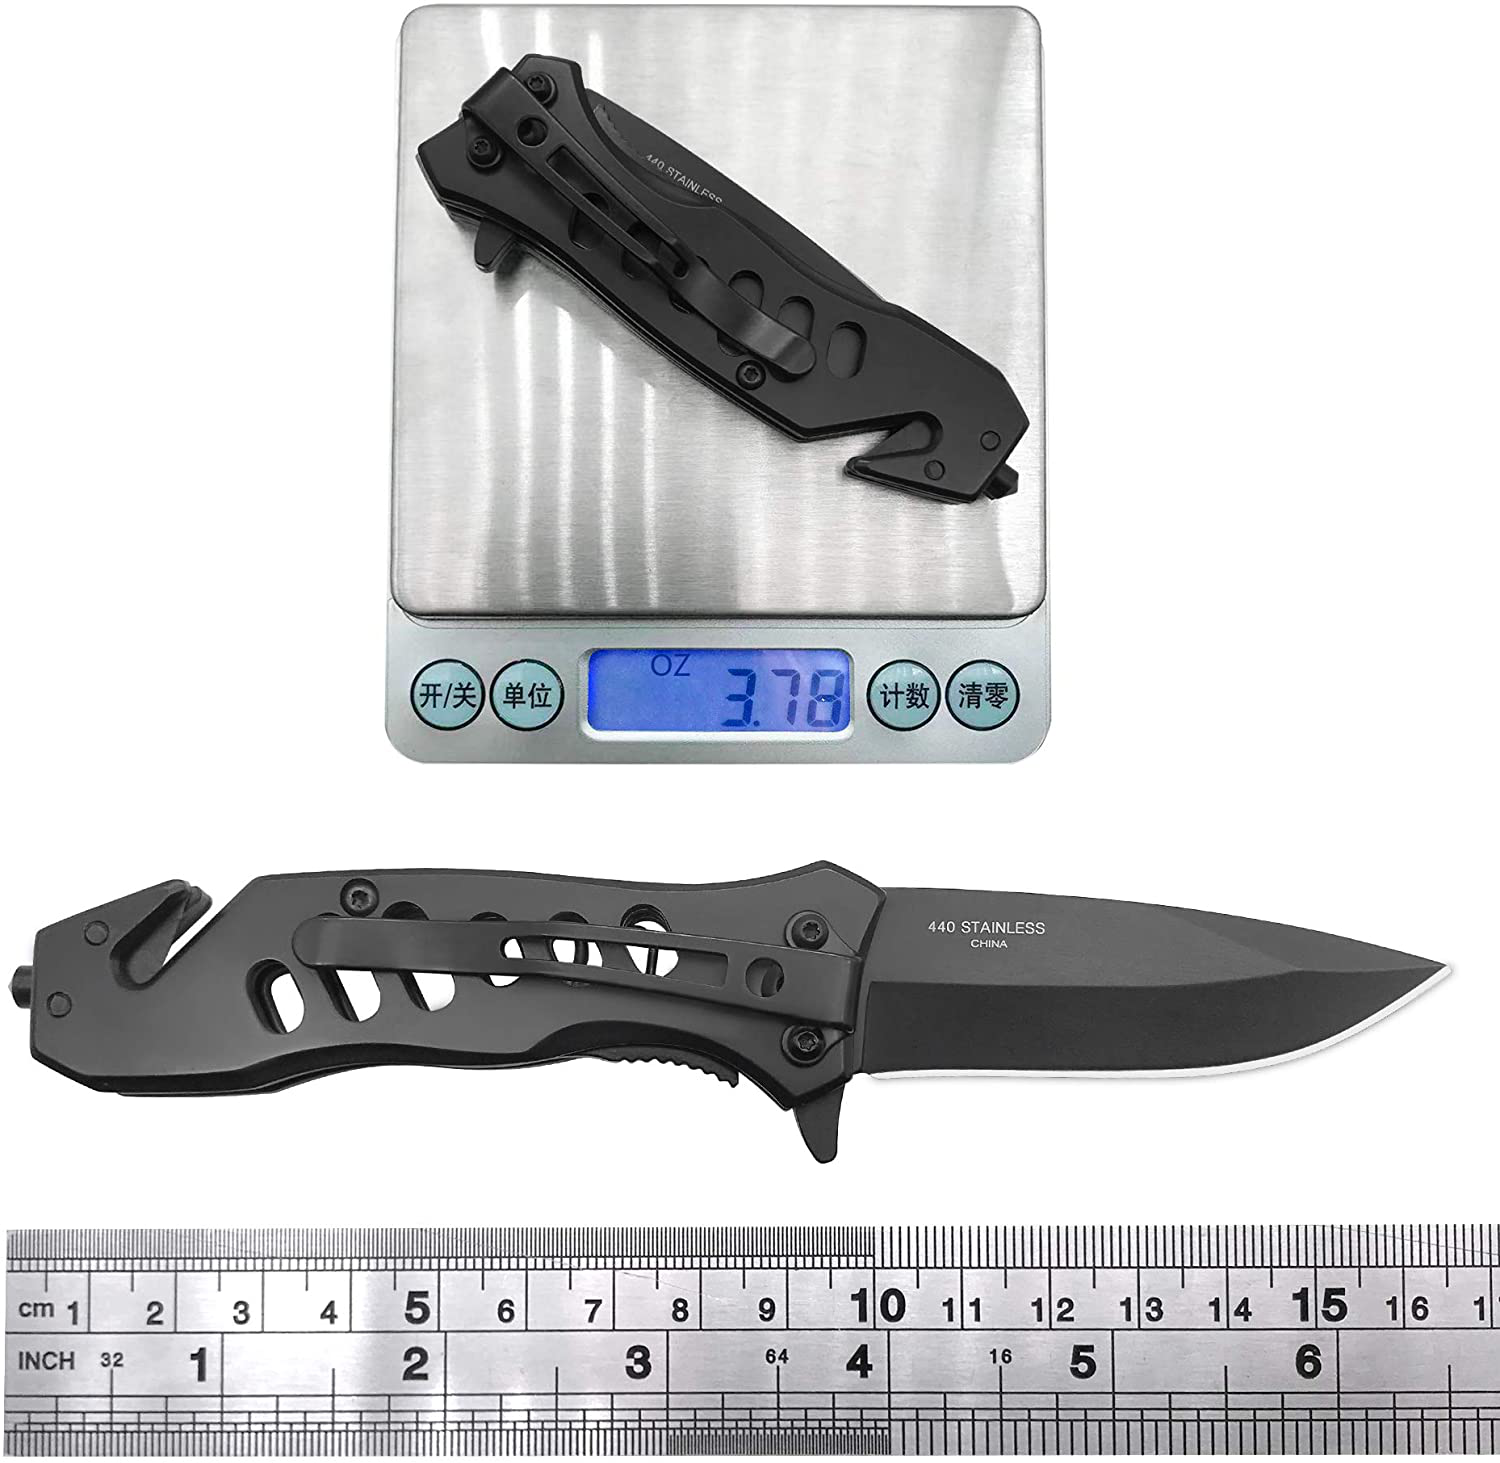 ALBATROSS EDC Cool Sharp Tactical Folding Pocket Knife,SpeedSafe Spring Assisted Opening Knifes with Liner Lock,Pocketclip,Glass Breaker,Seatbelt Cutter